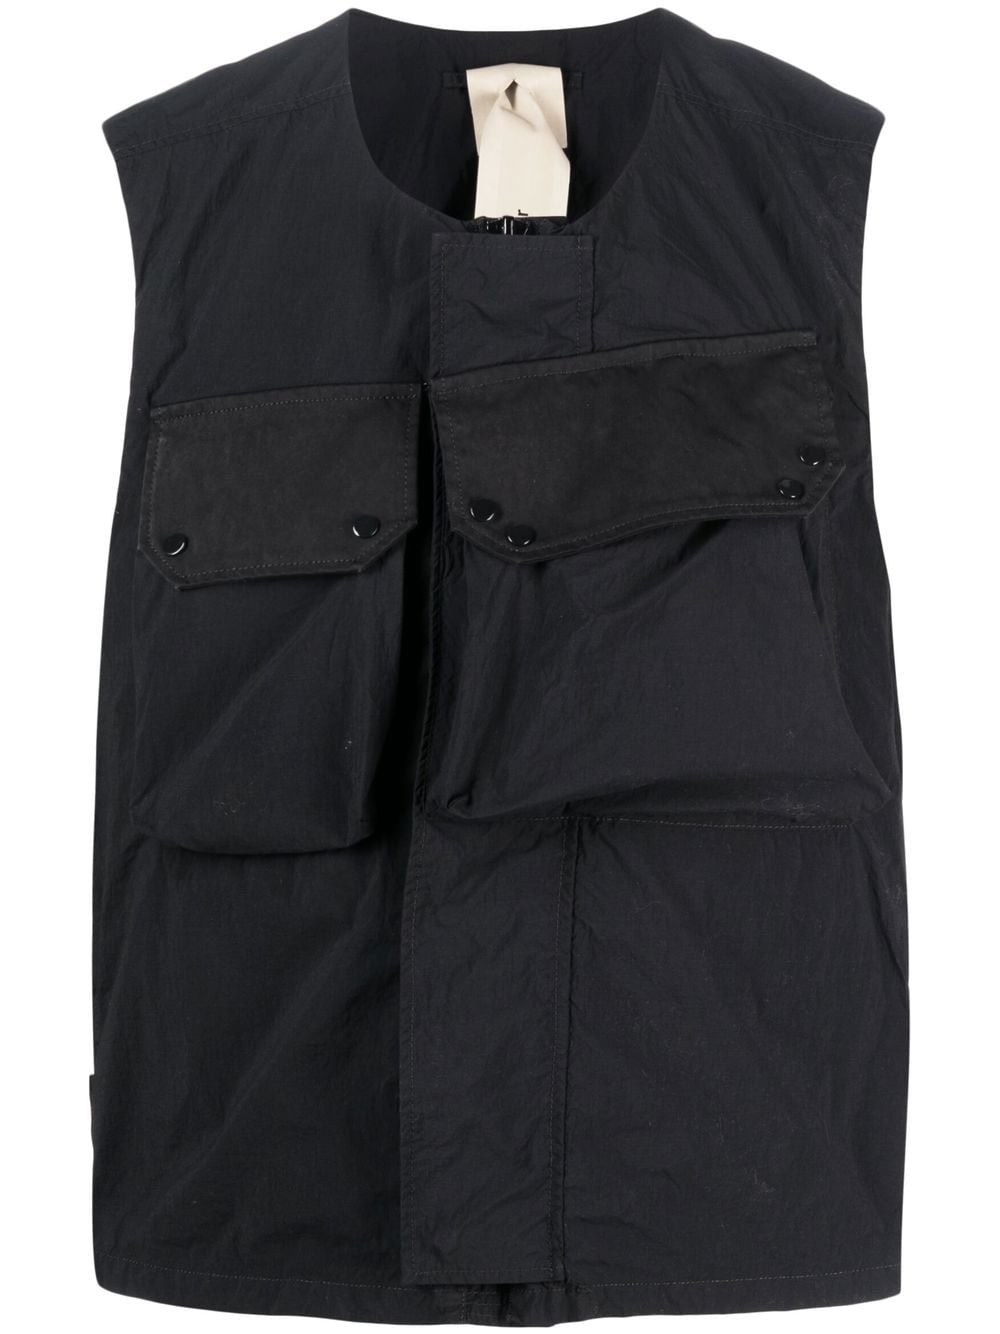 Image 1 of Ten C flap-pocket gilet vest